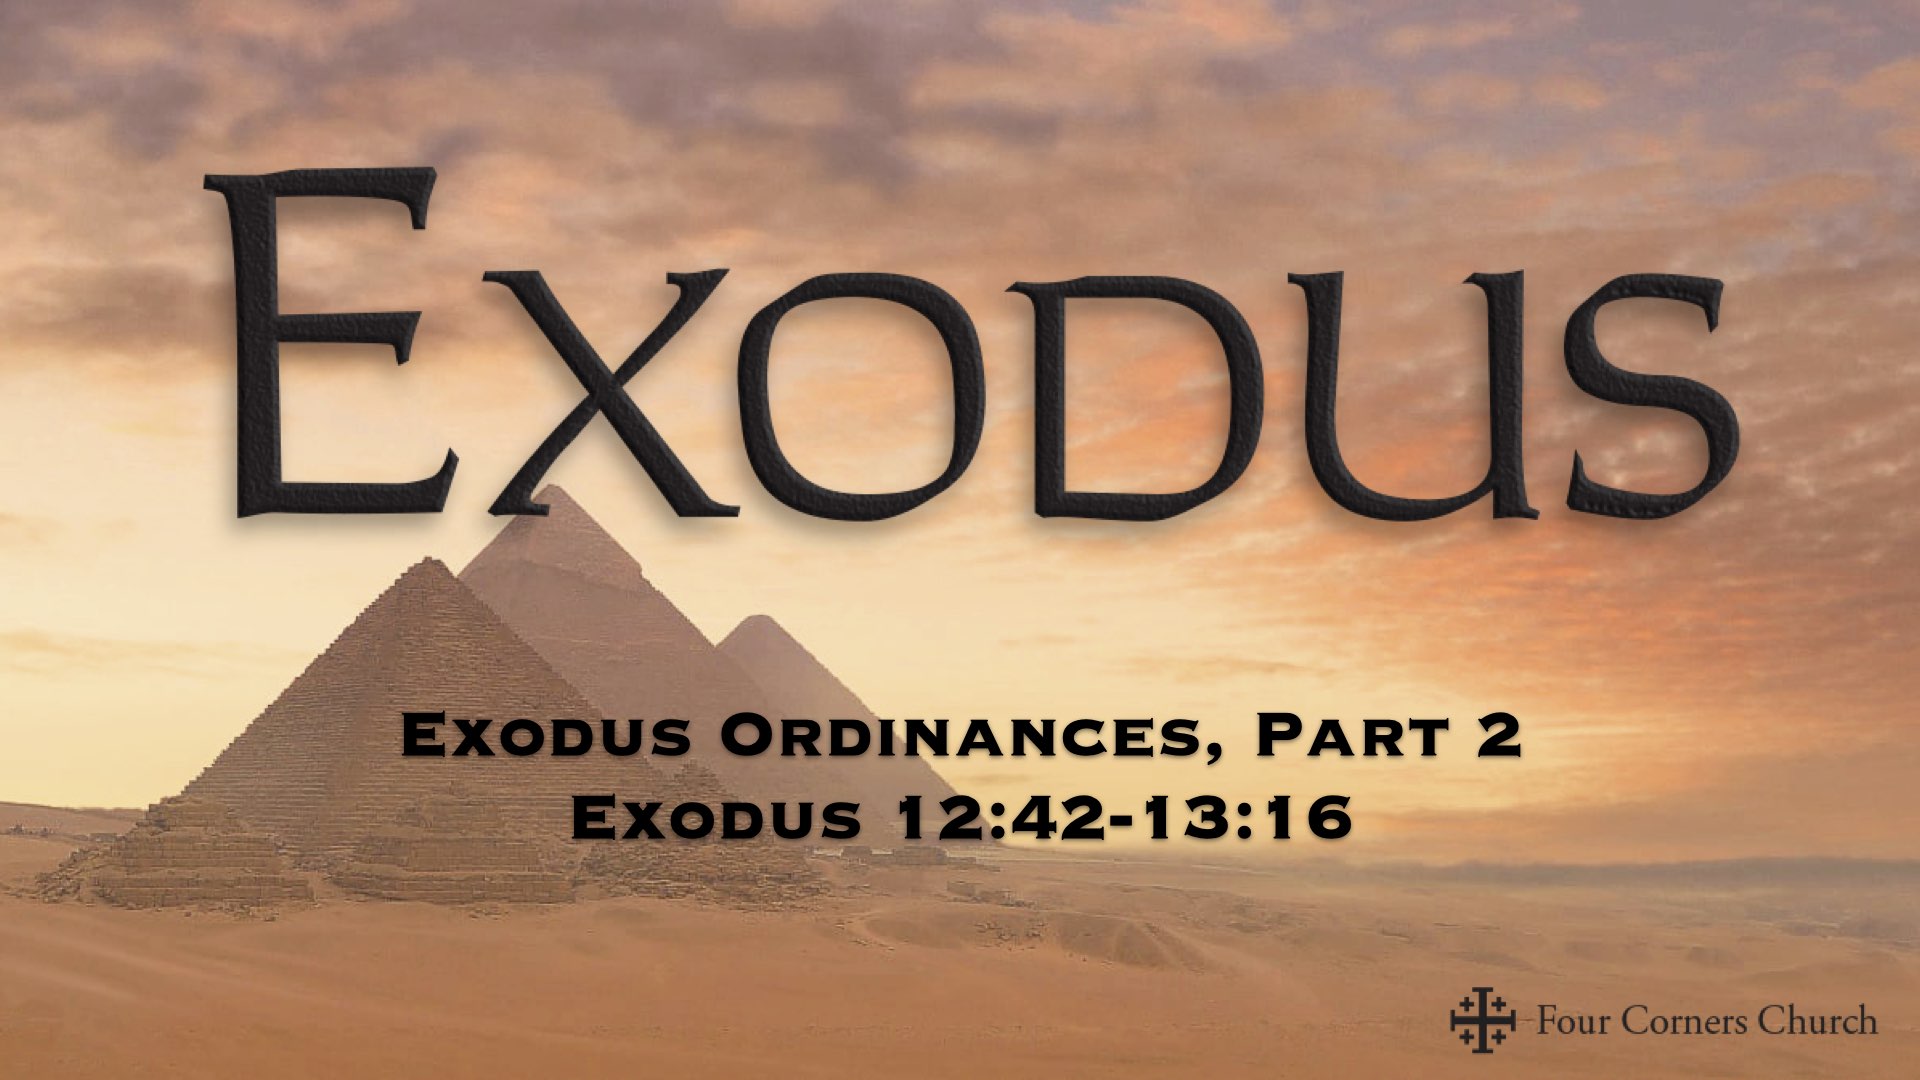 Exodus Ordinances, Part 2